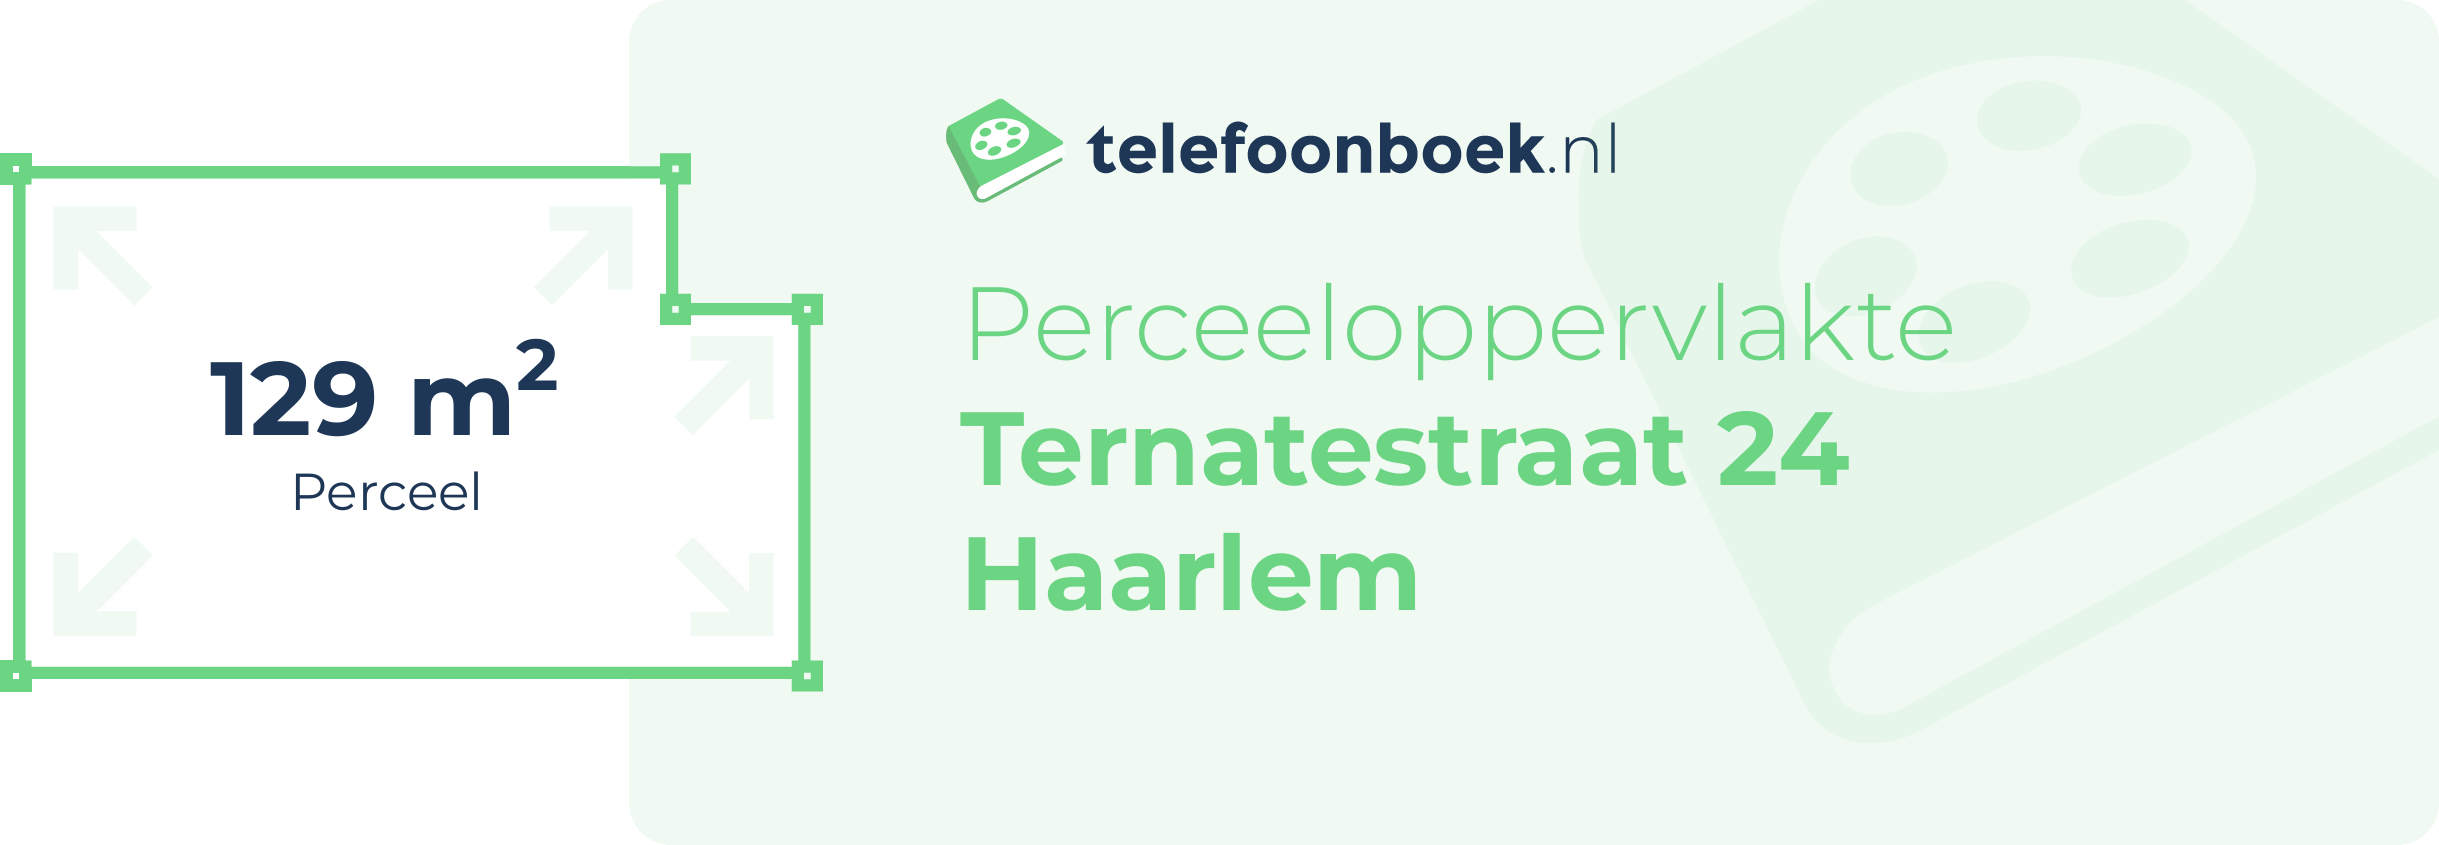 Perceeloppervlakte Ternatestraat 24 Haarlem